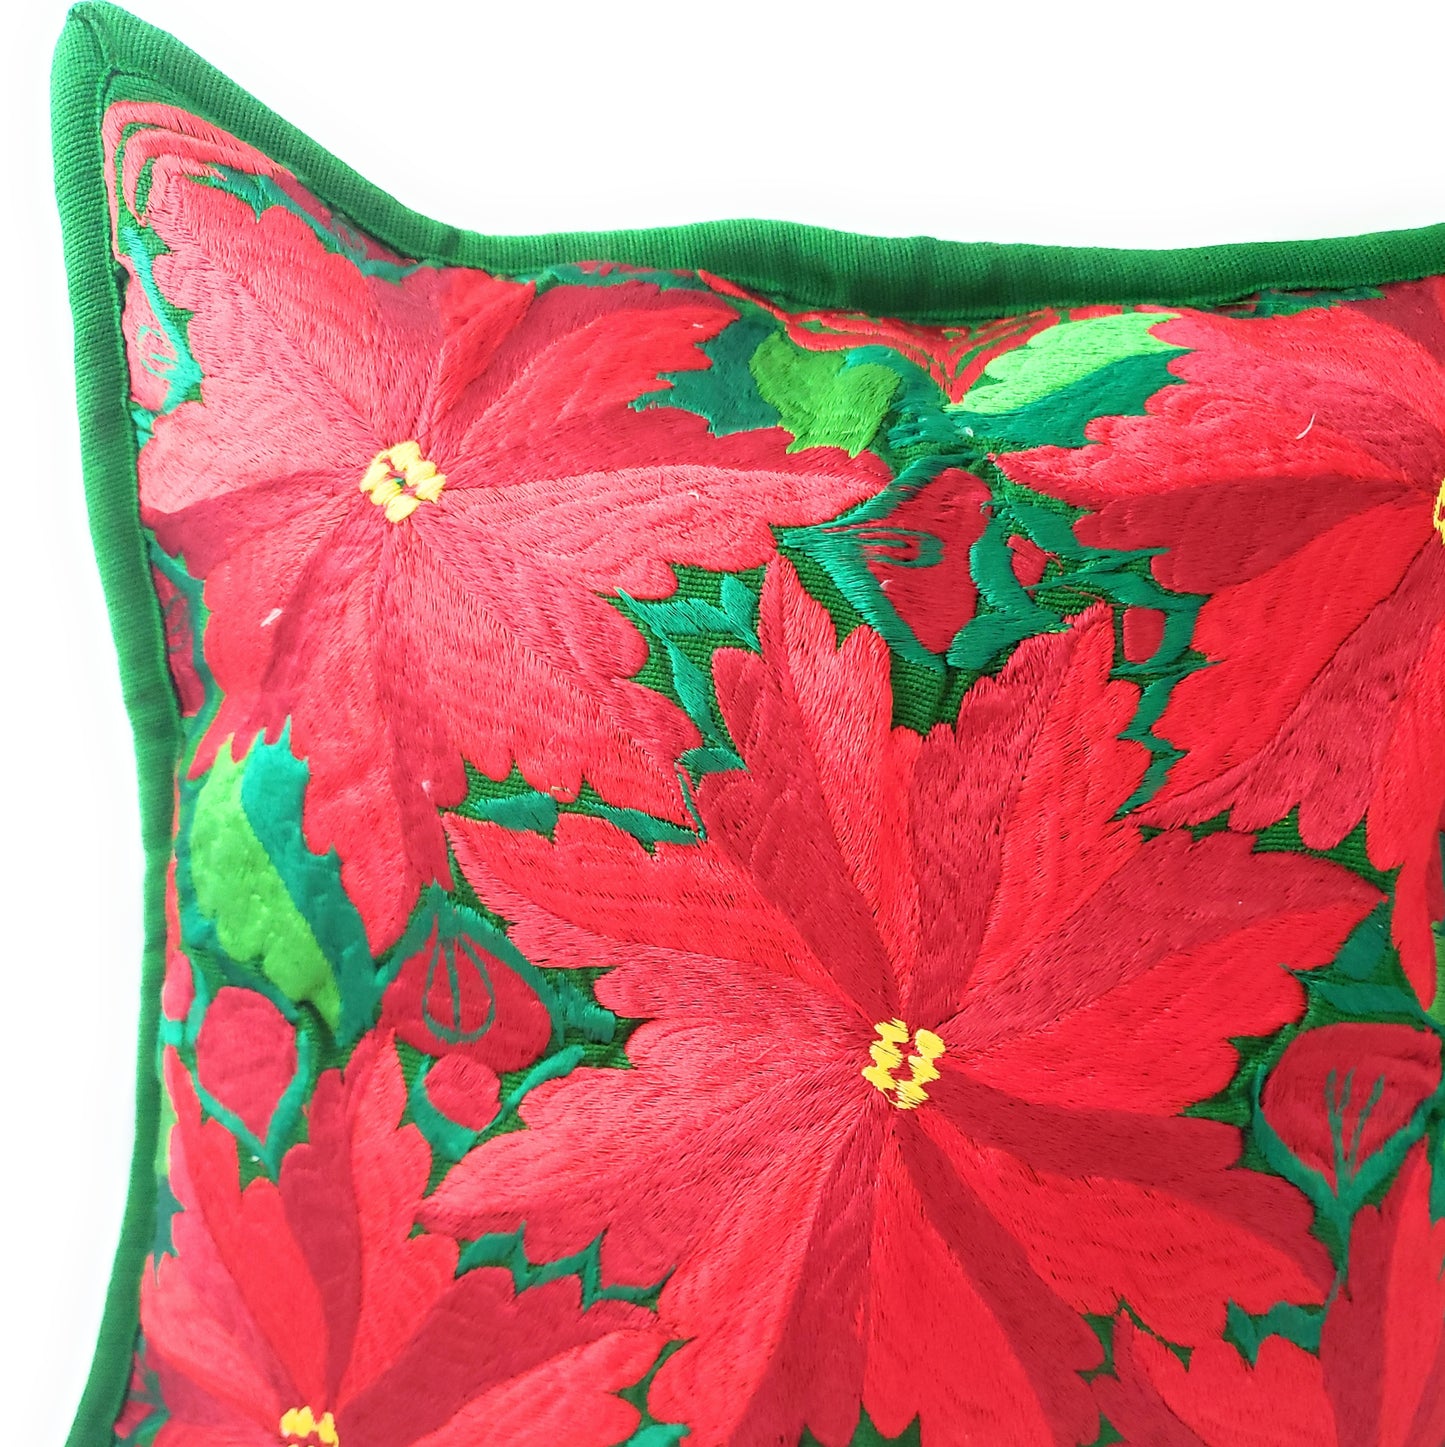 Christmas Pillow Cover Oaxaca Handmade Embroidered Poinsettia Noche Buena